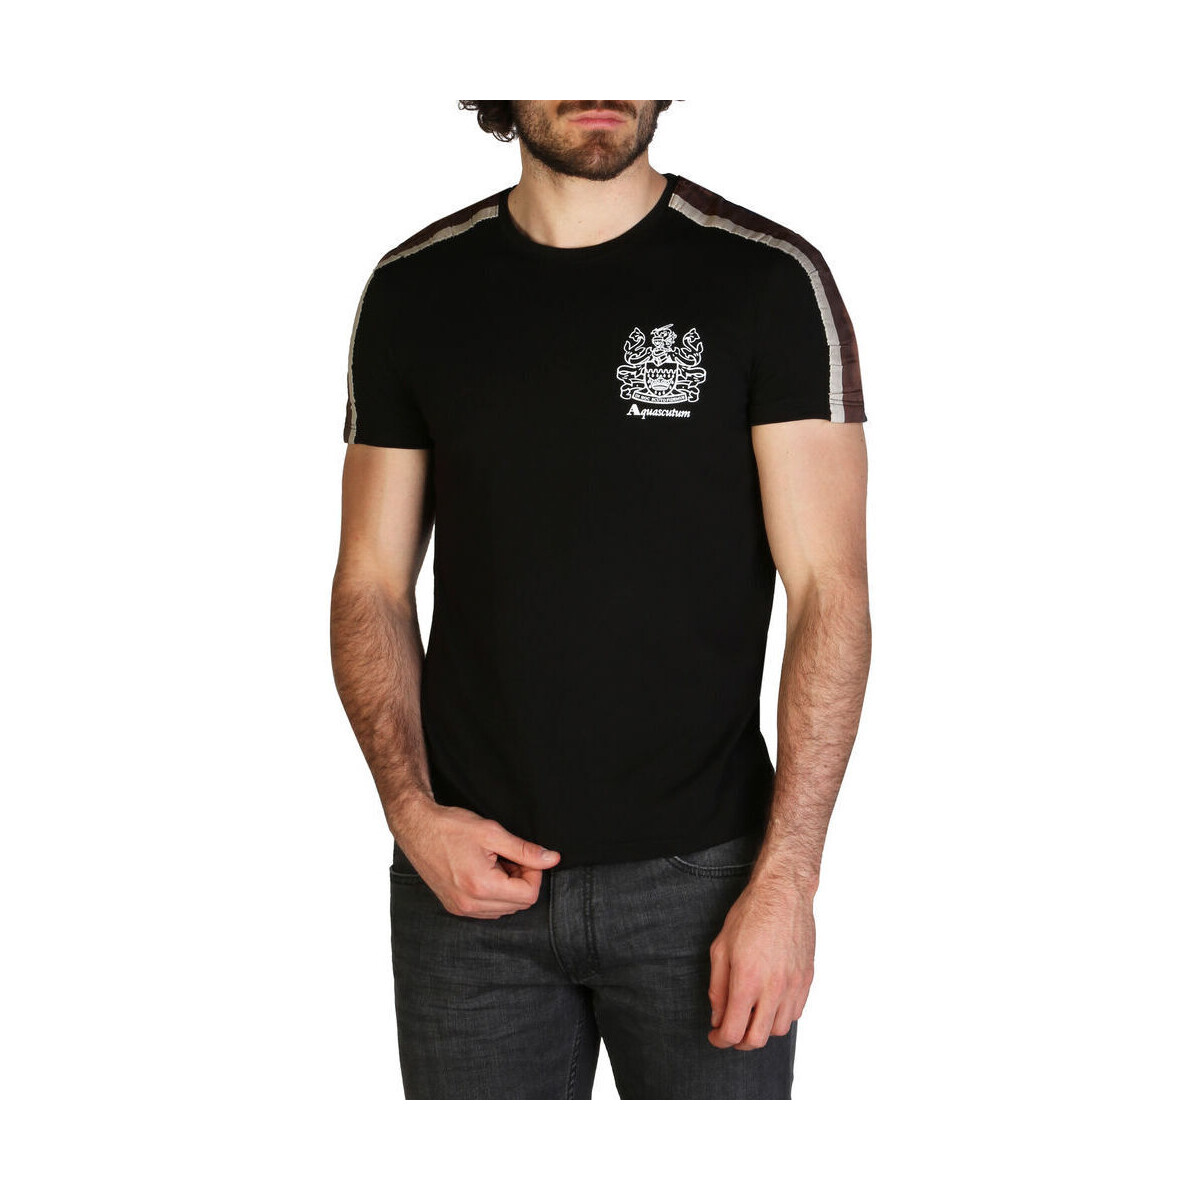 Vêtements Homme T-shirts manches courtes Aquascutum - qmt017m0 Noir